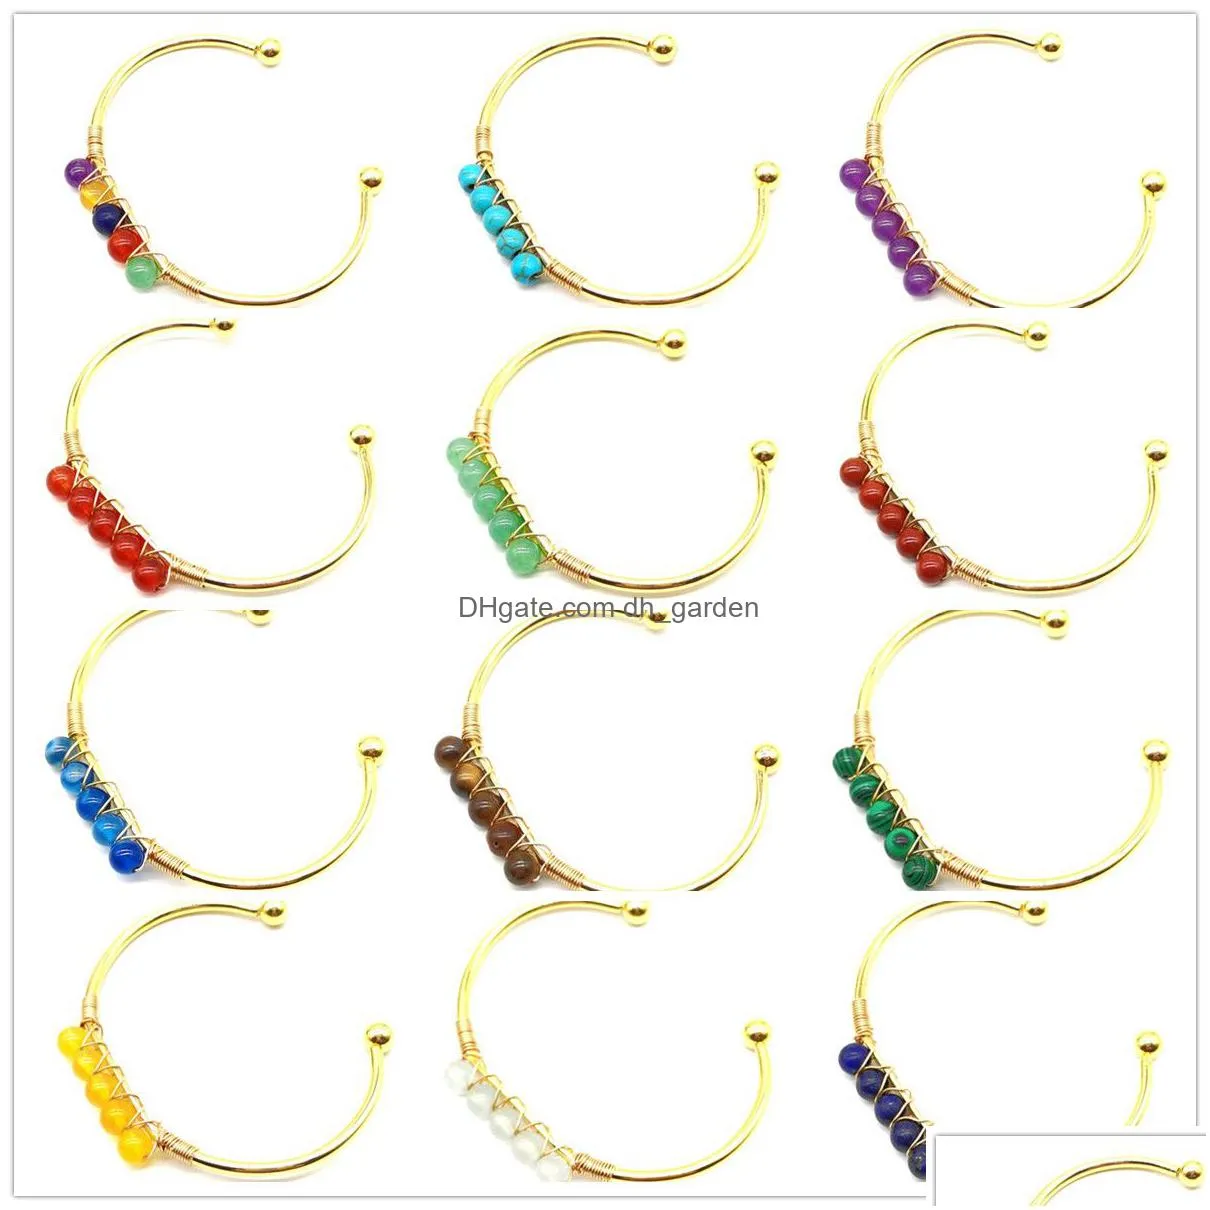 6mm round gemstone cuff bracelet for women girls handmade gold wire woven lift of tree healing chakra crystal friendship bangle charms